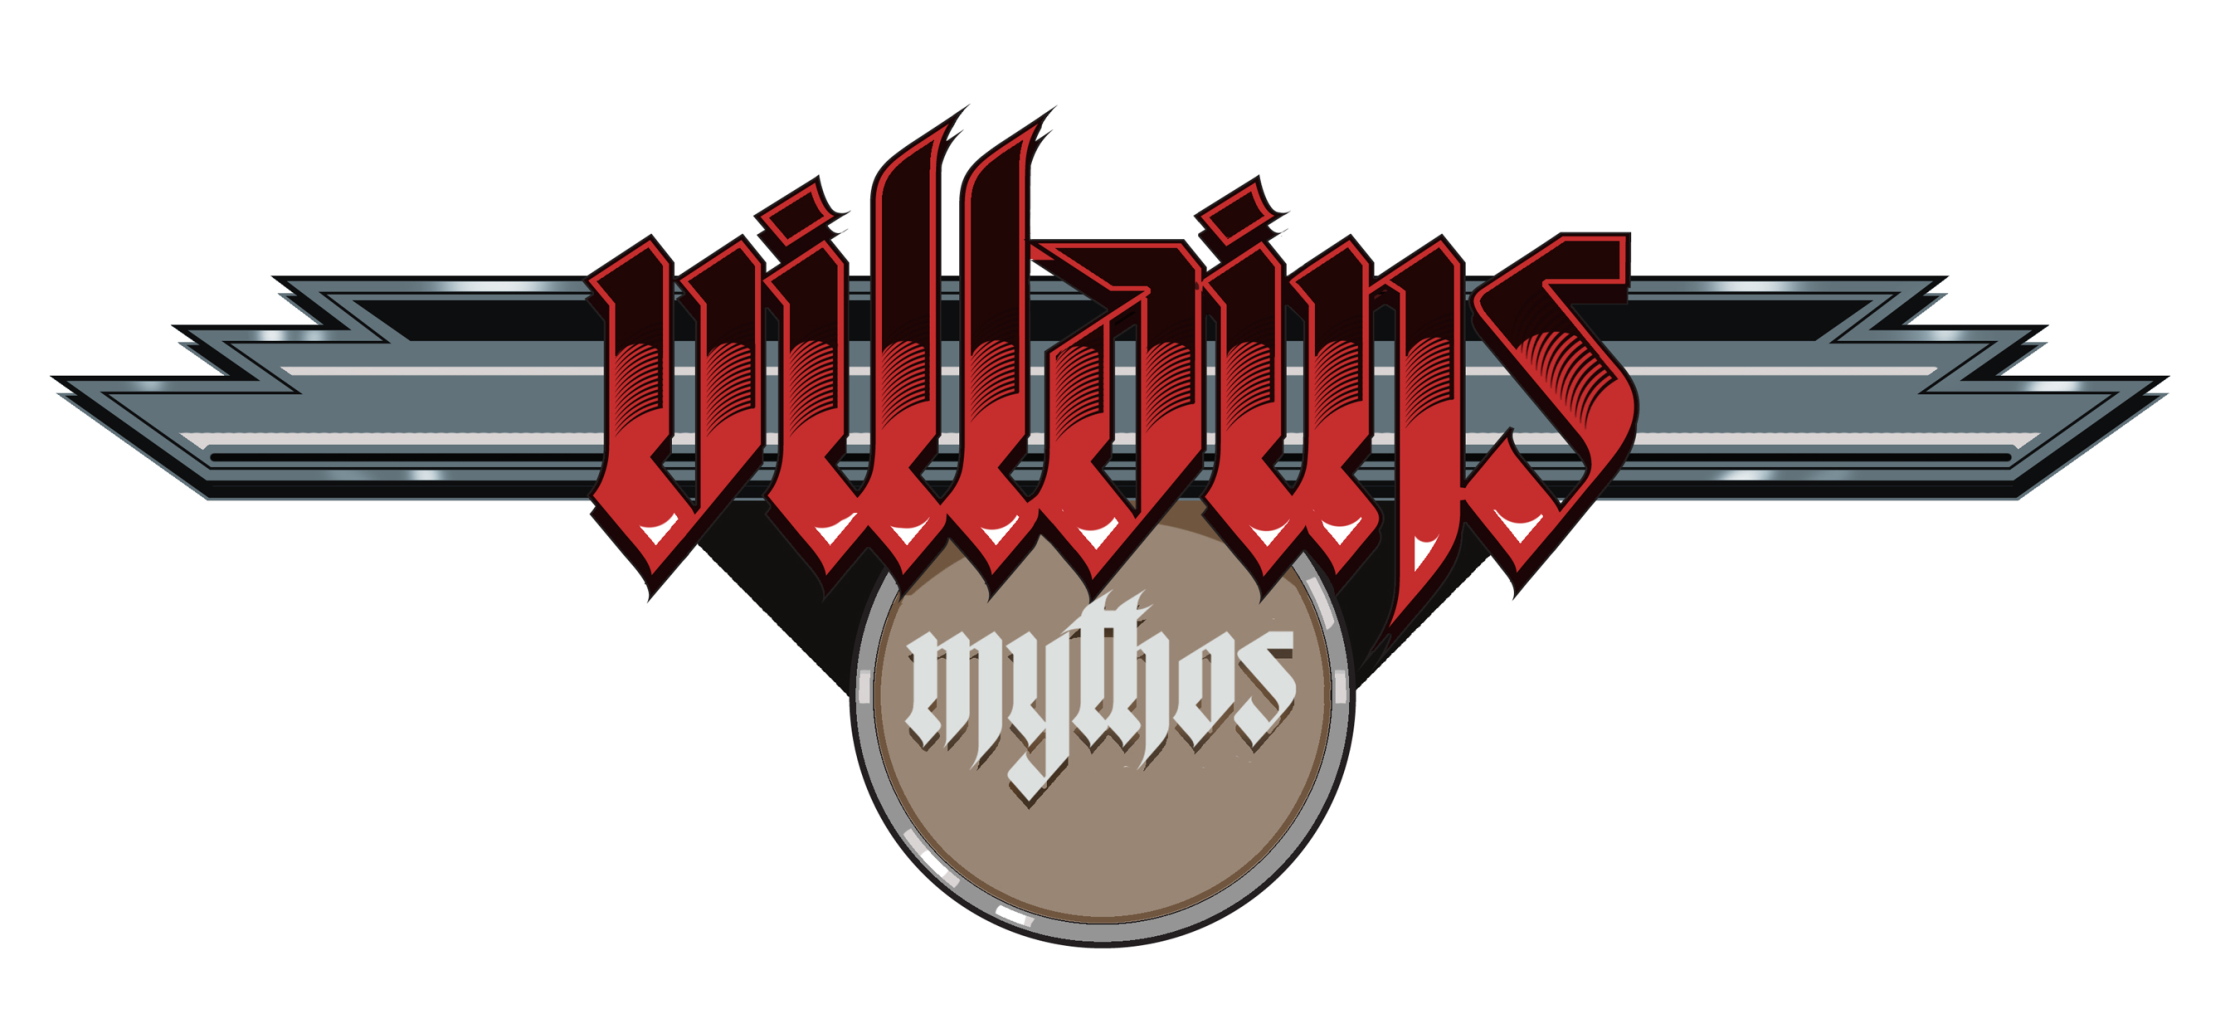 59-villains-logo.jpg